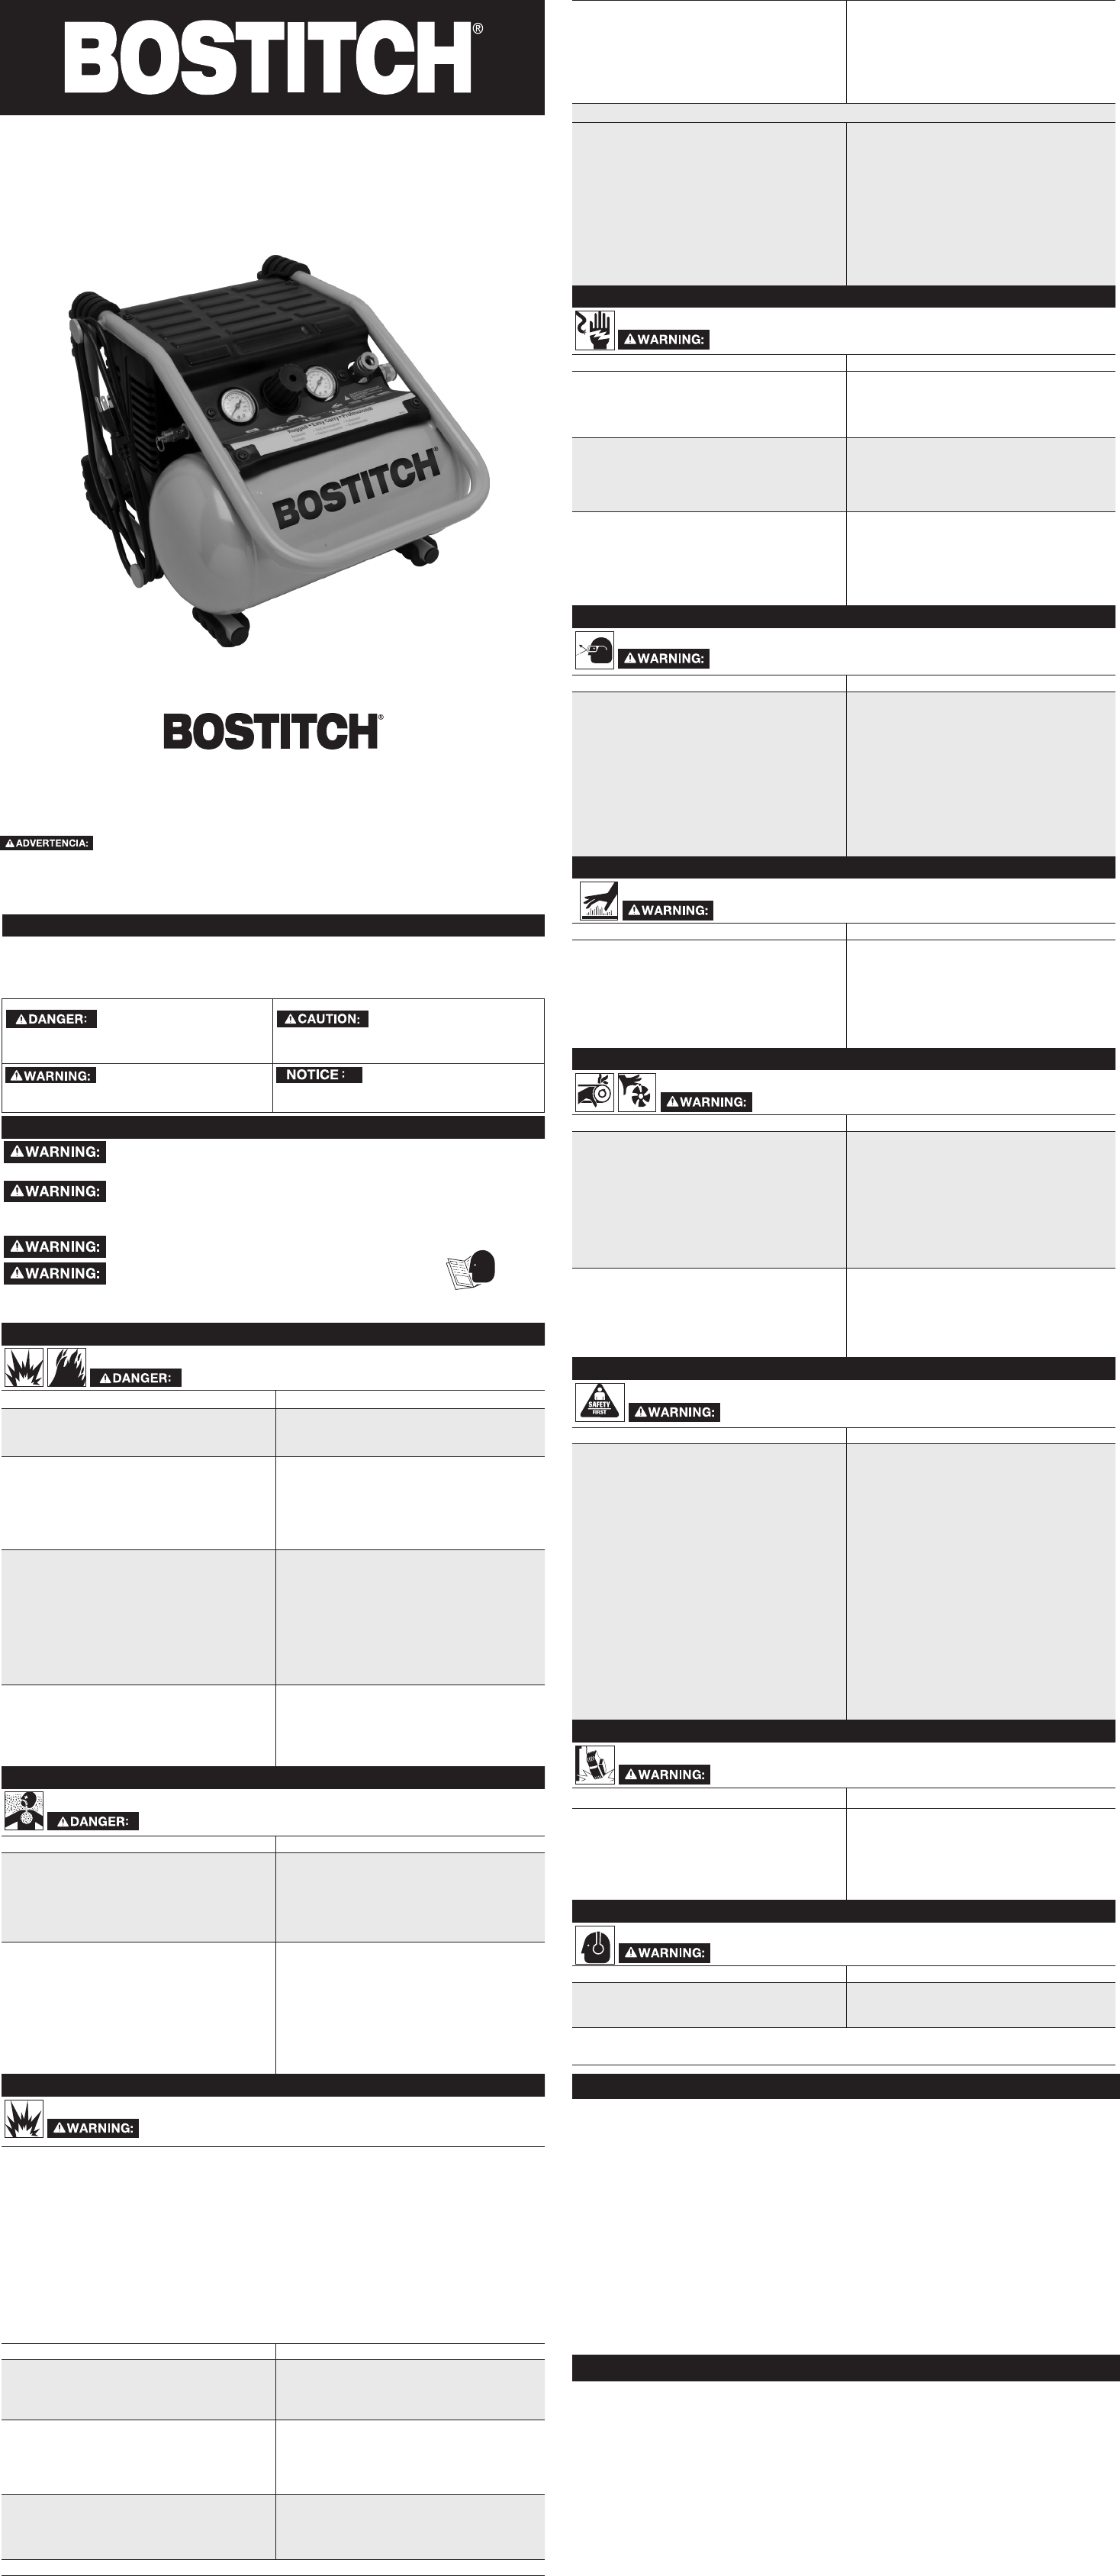 bostitch btfp02012 manual pdf